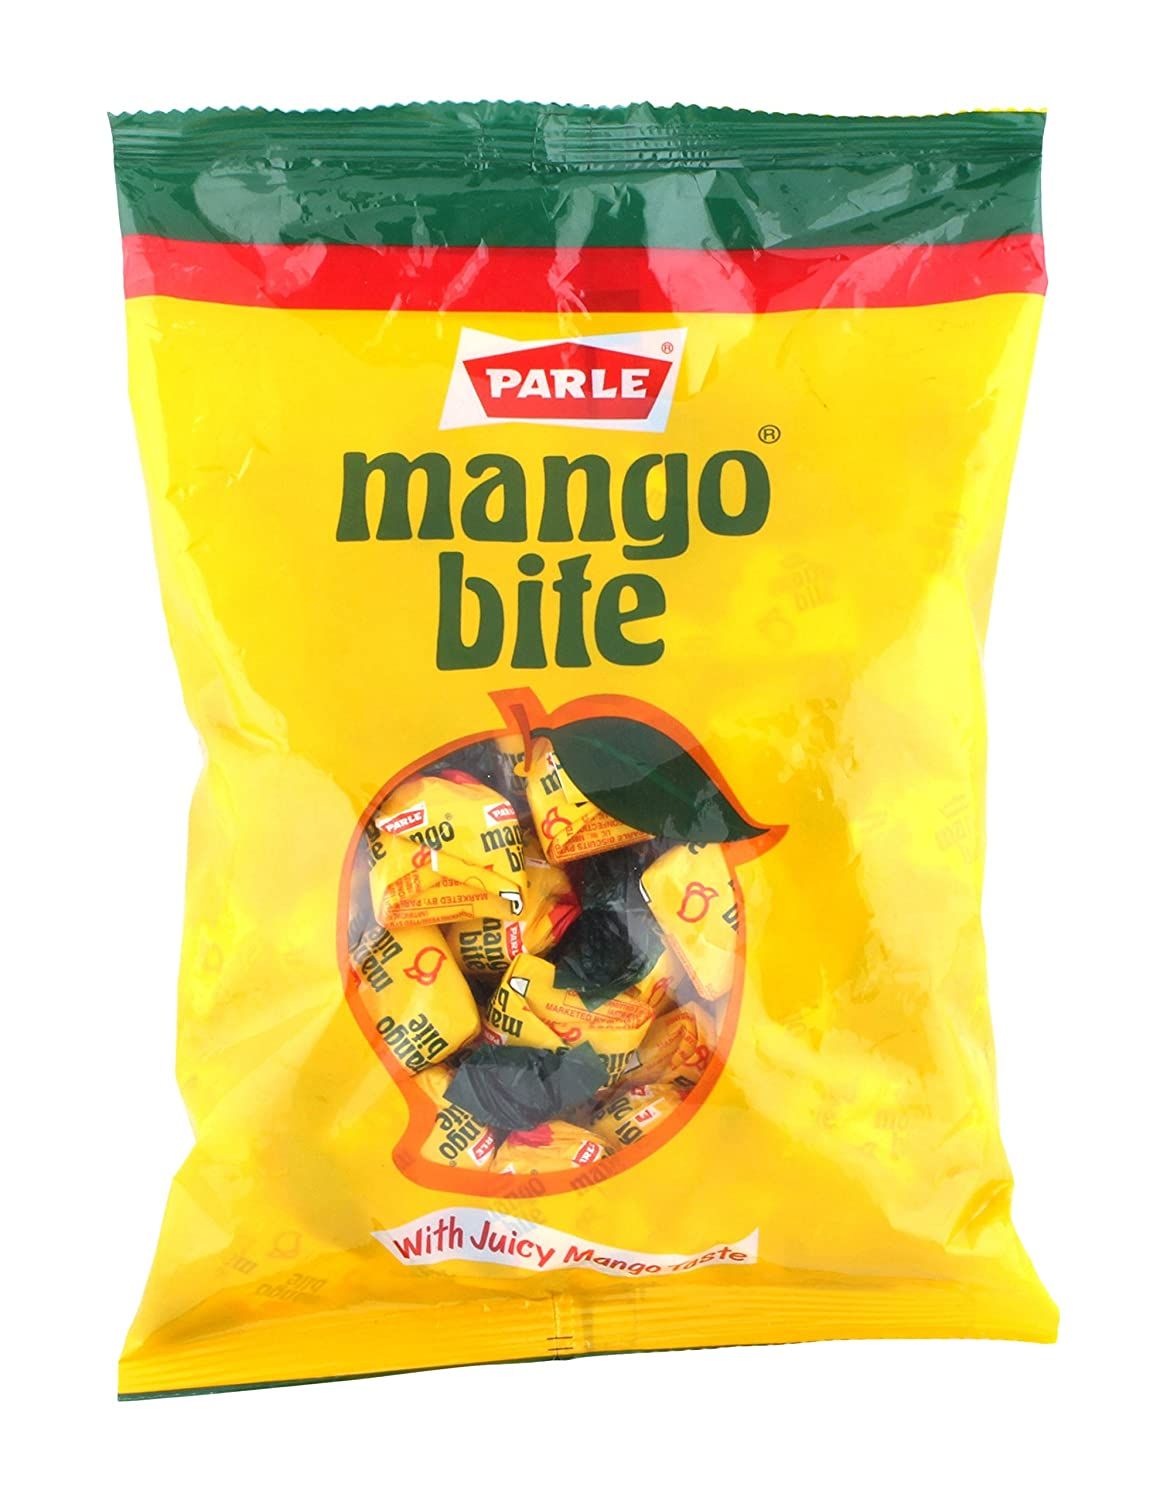 Parle Mango Bite Candy Image